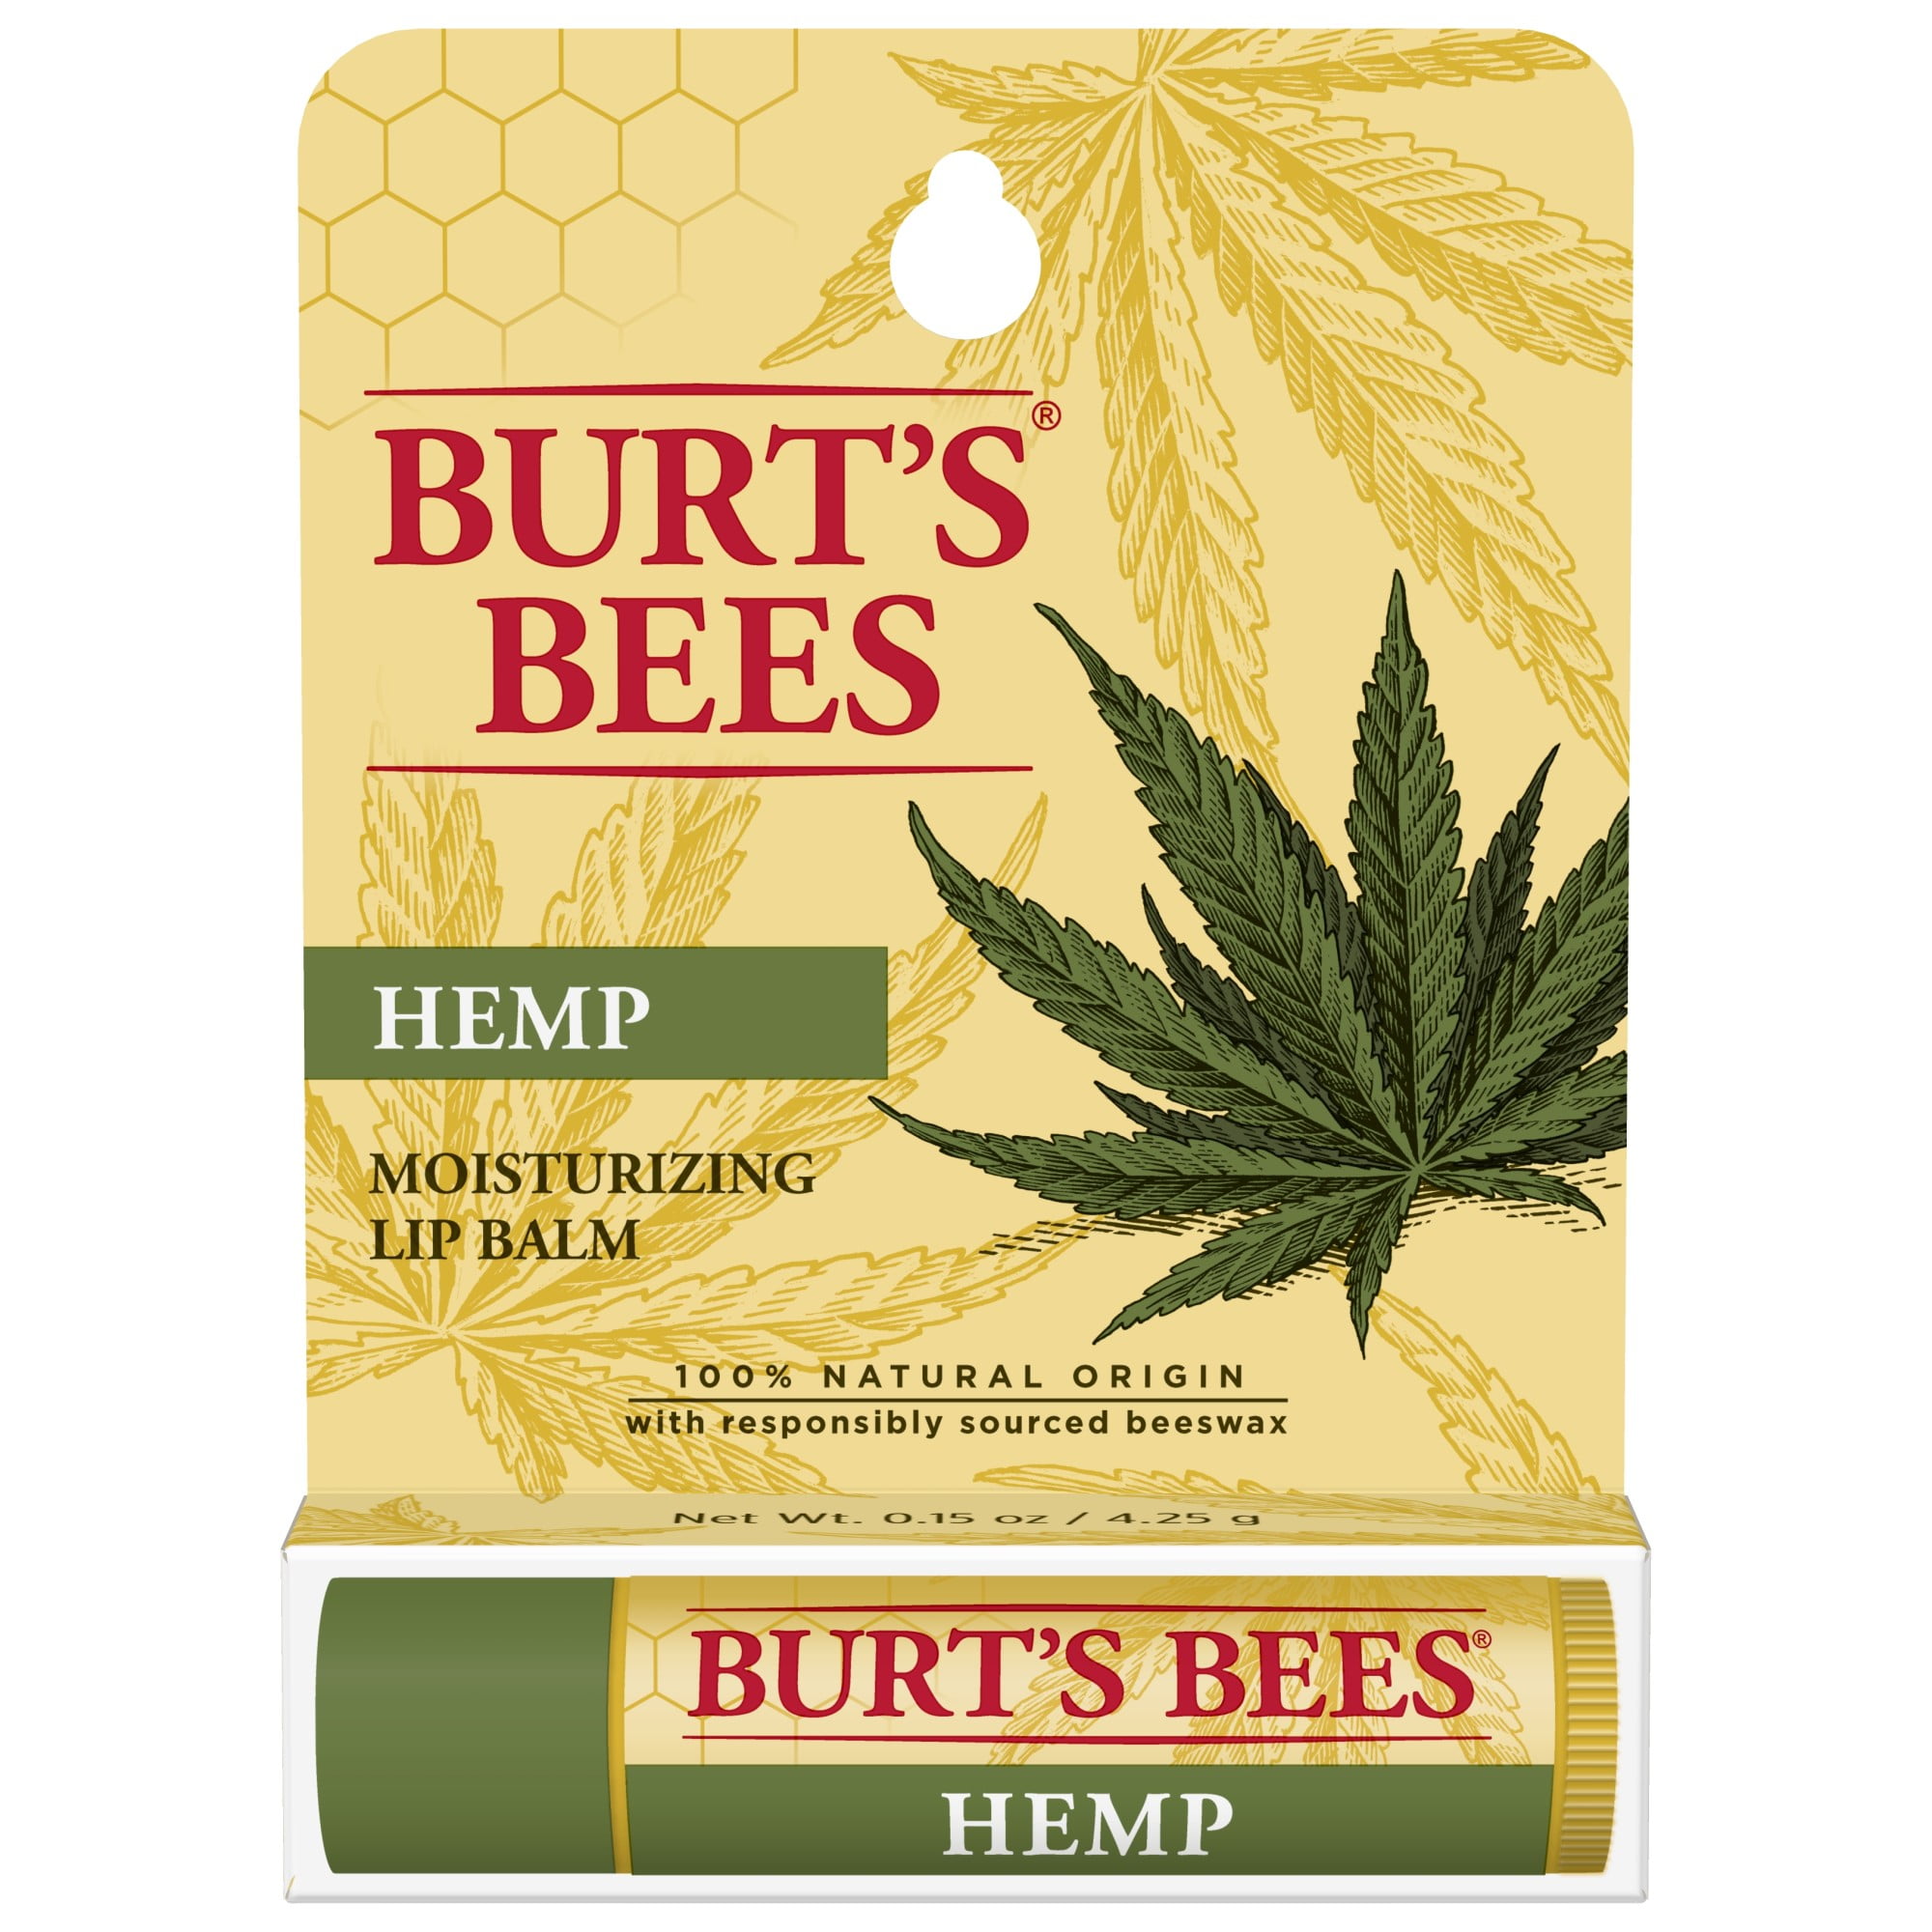 Buy Burt's Bees at